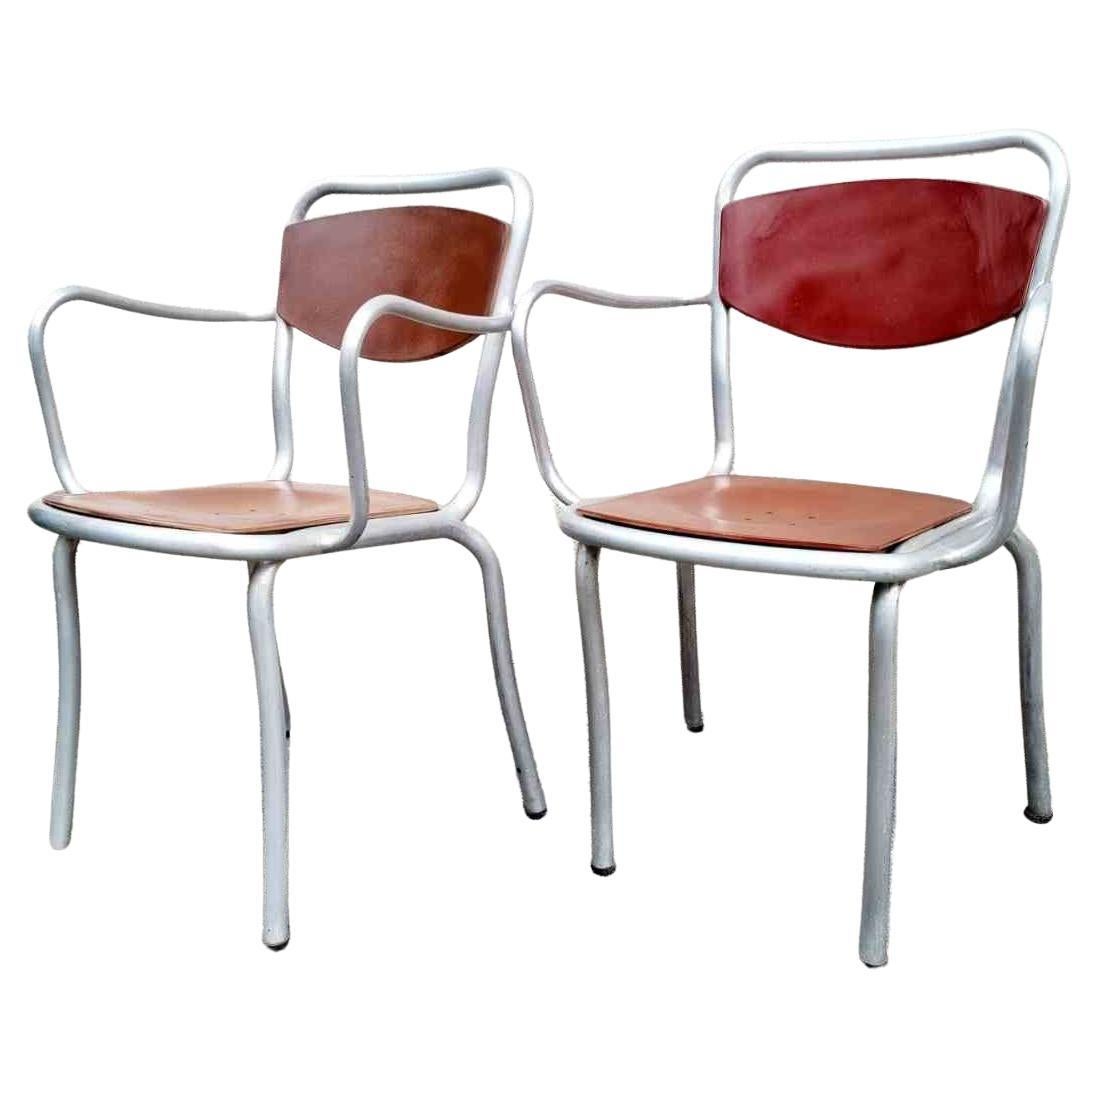 RIMA Chairs